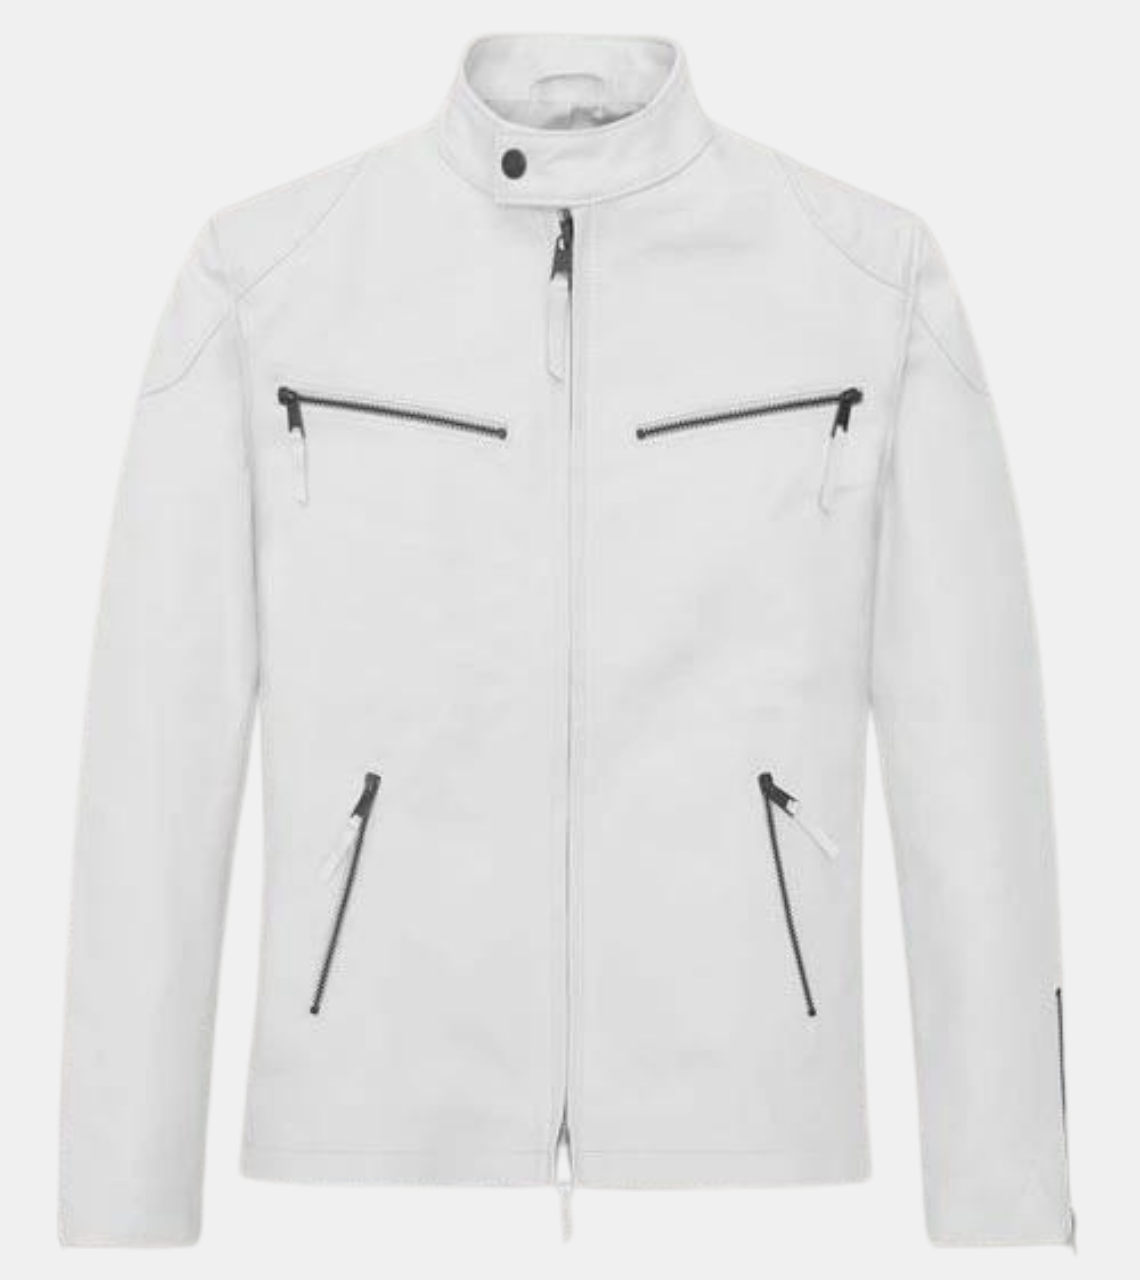 Consuel Men's White Leather Jacket